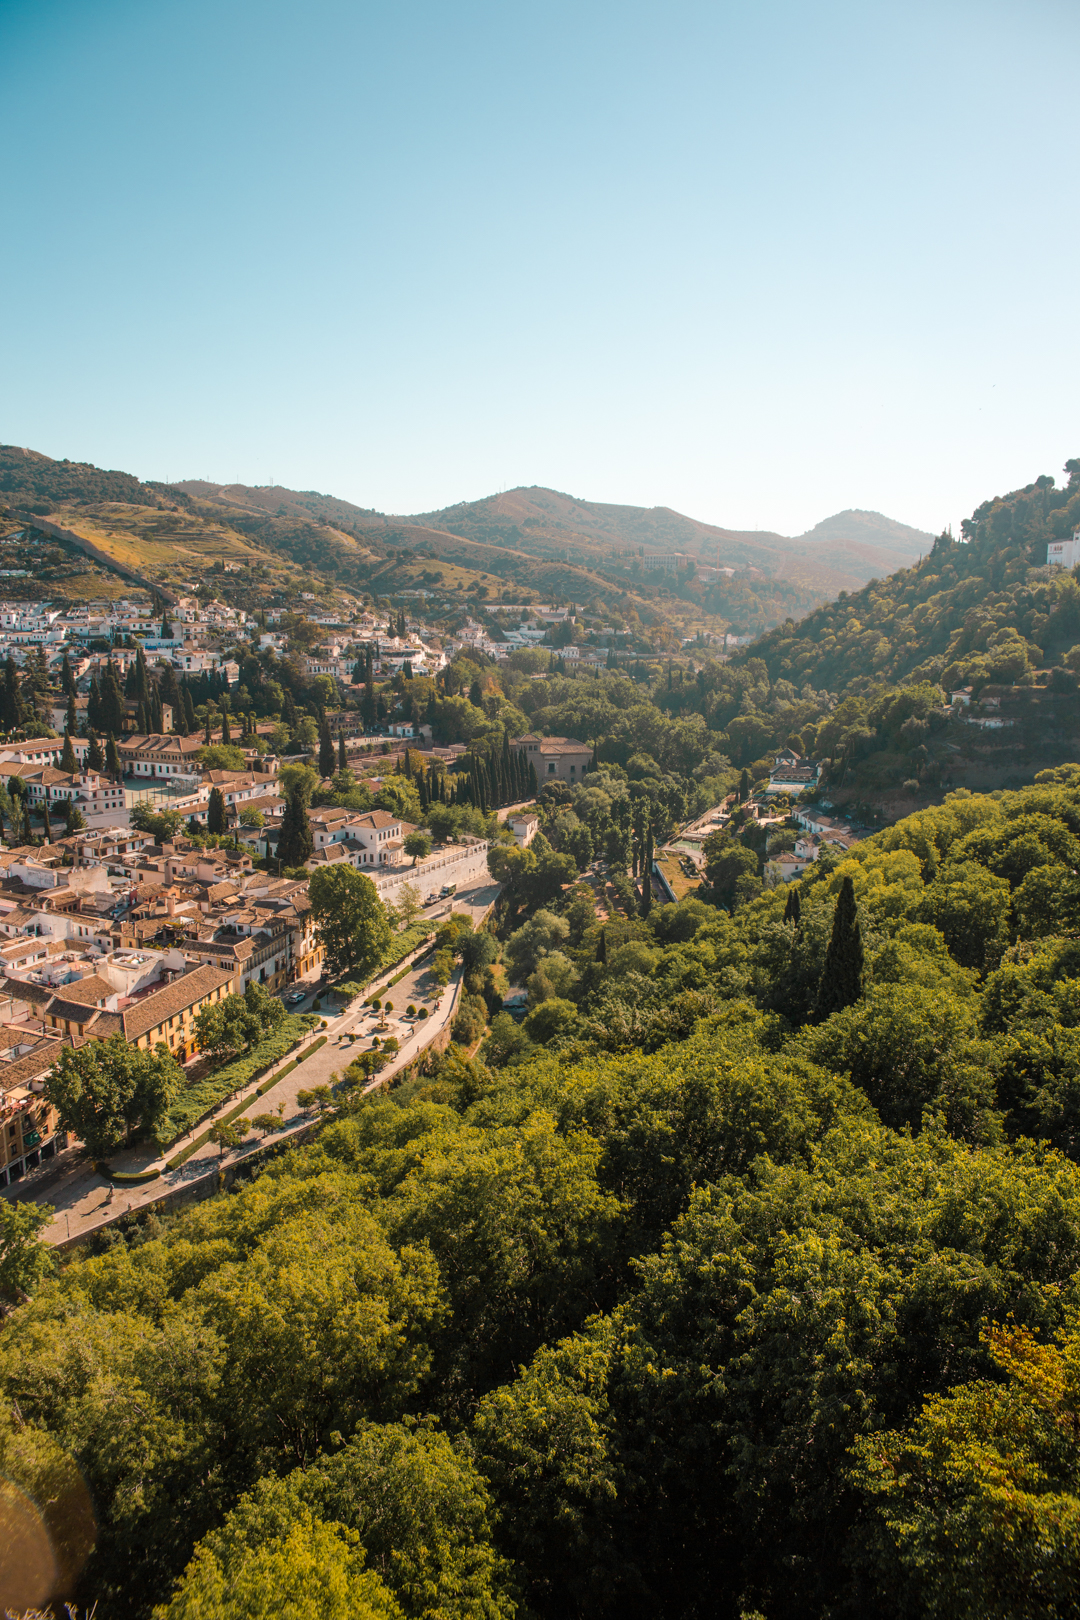 The Alcazar of Granada